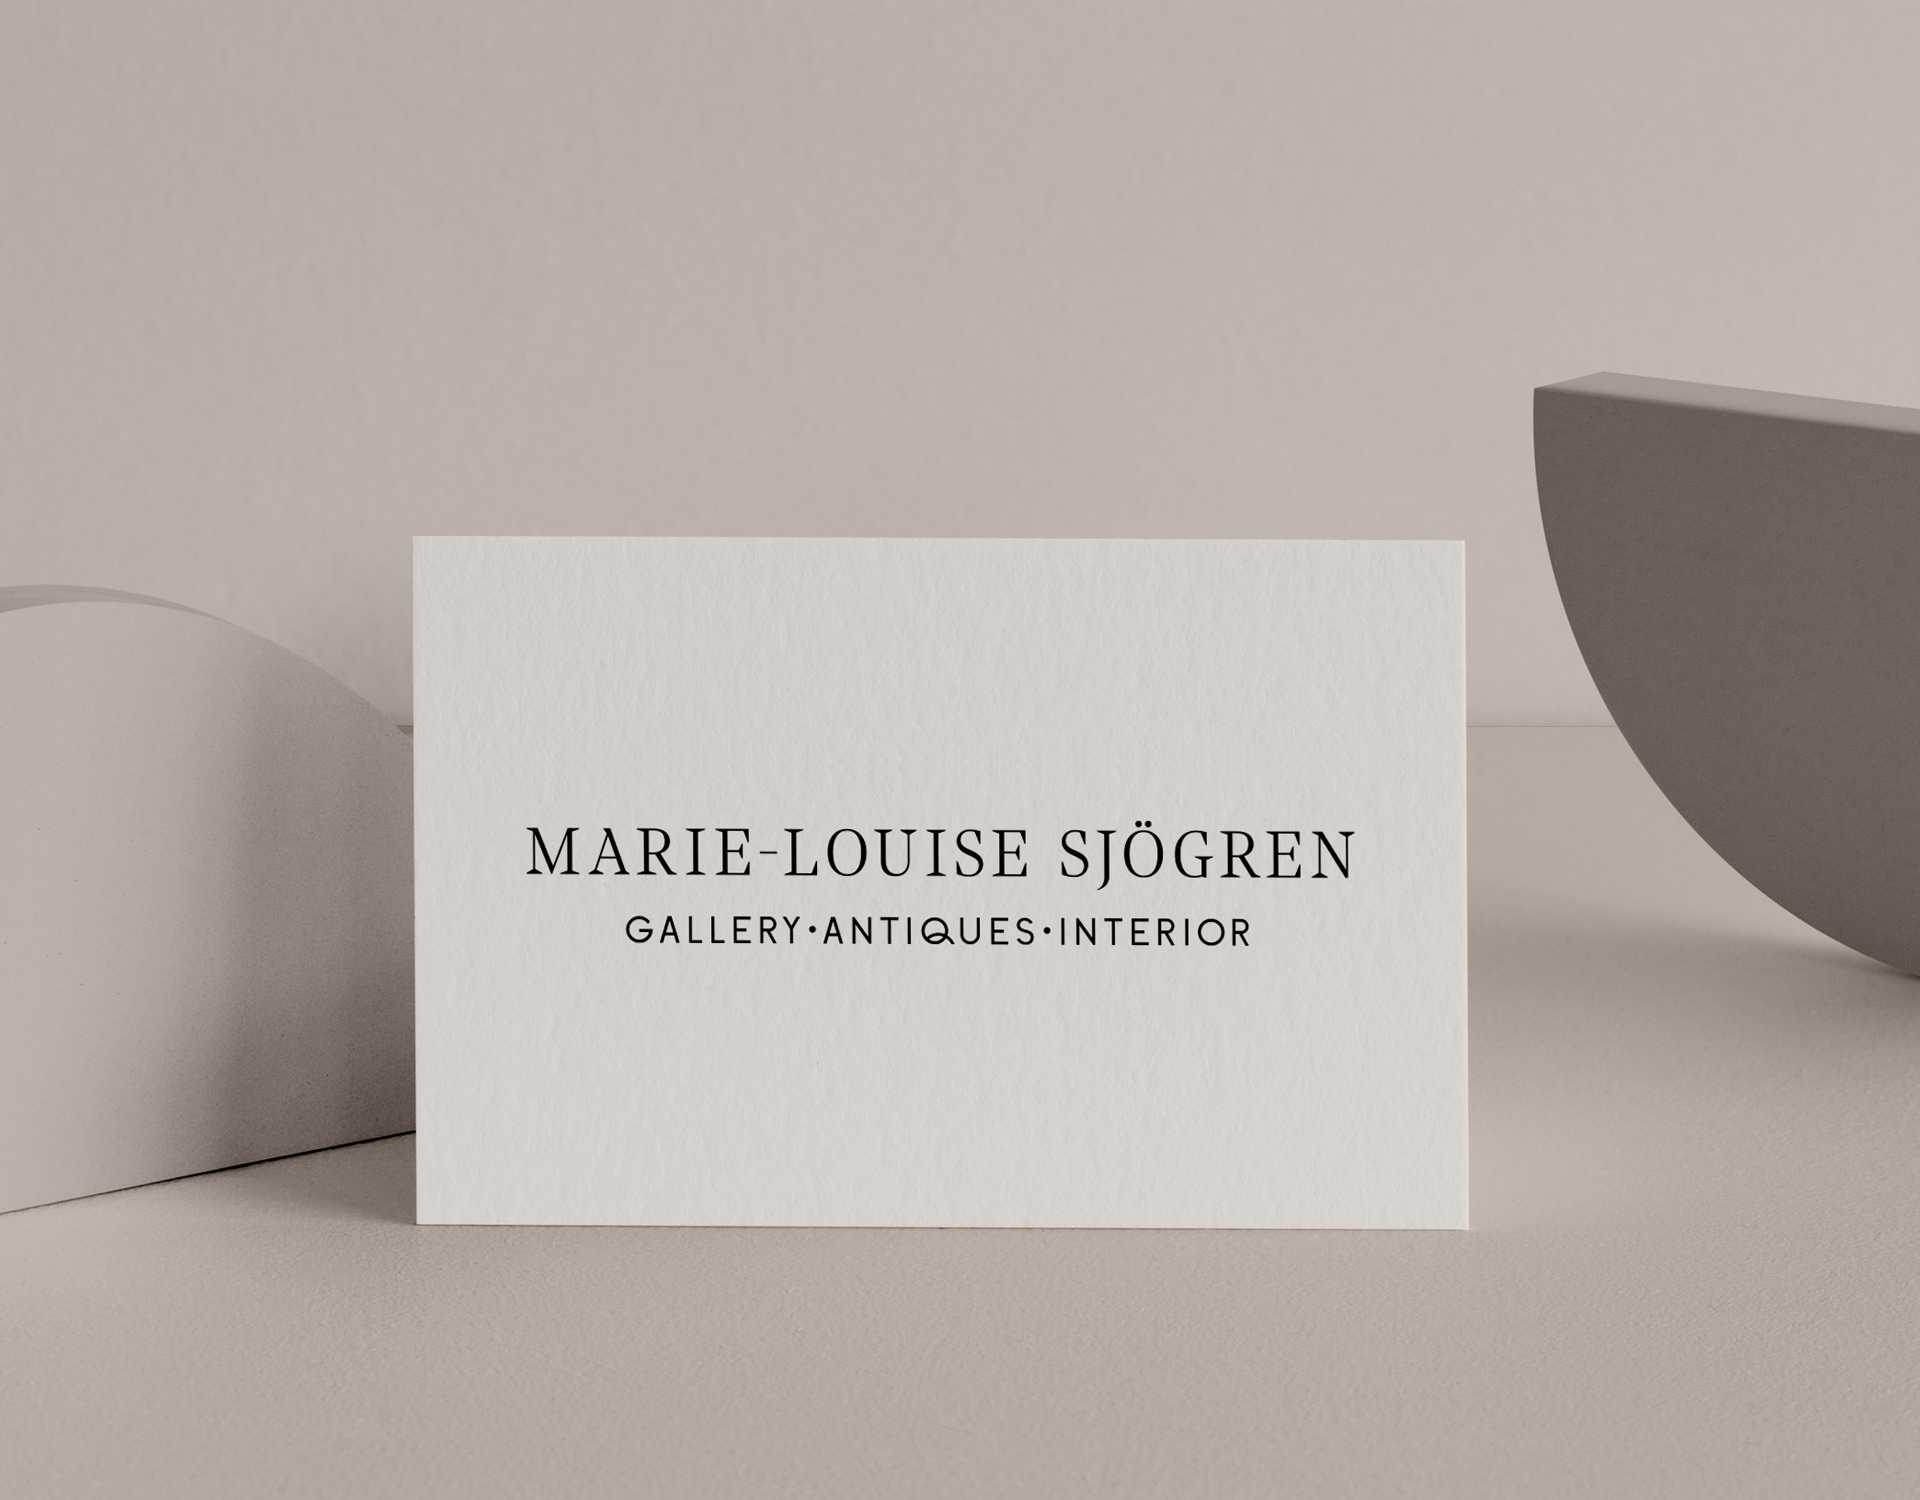 Selected work for Marie-Louise Sjögren designed by Studio Poi